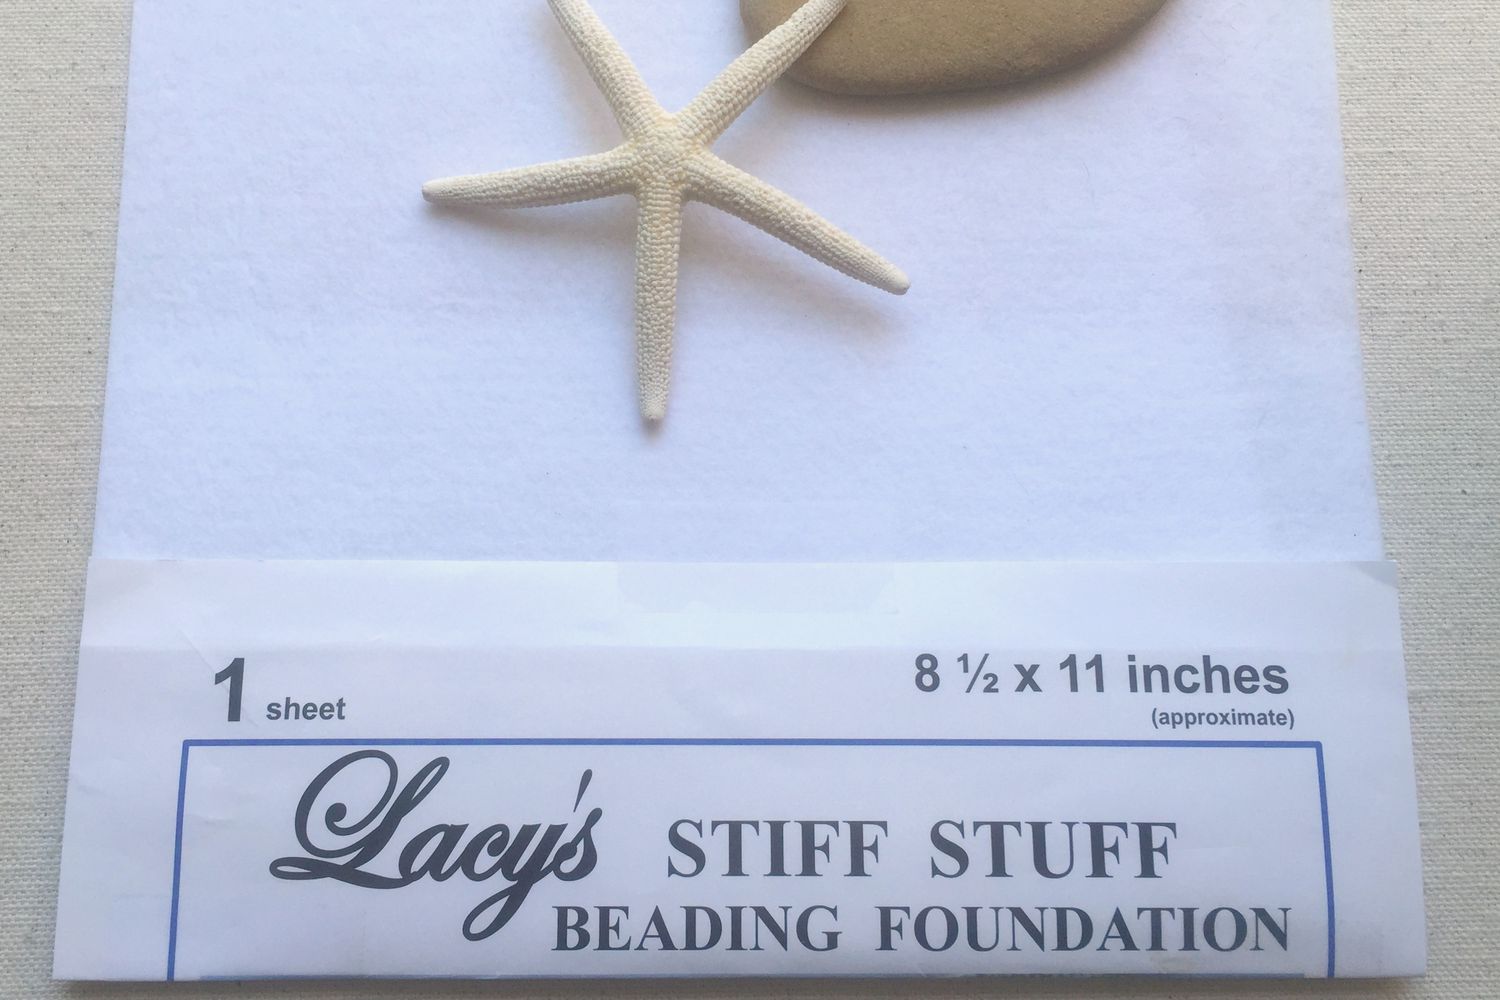 Lacy's Stiff Stuff beading foundation